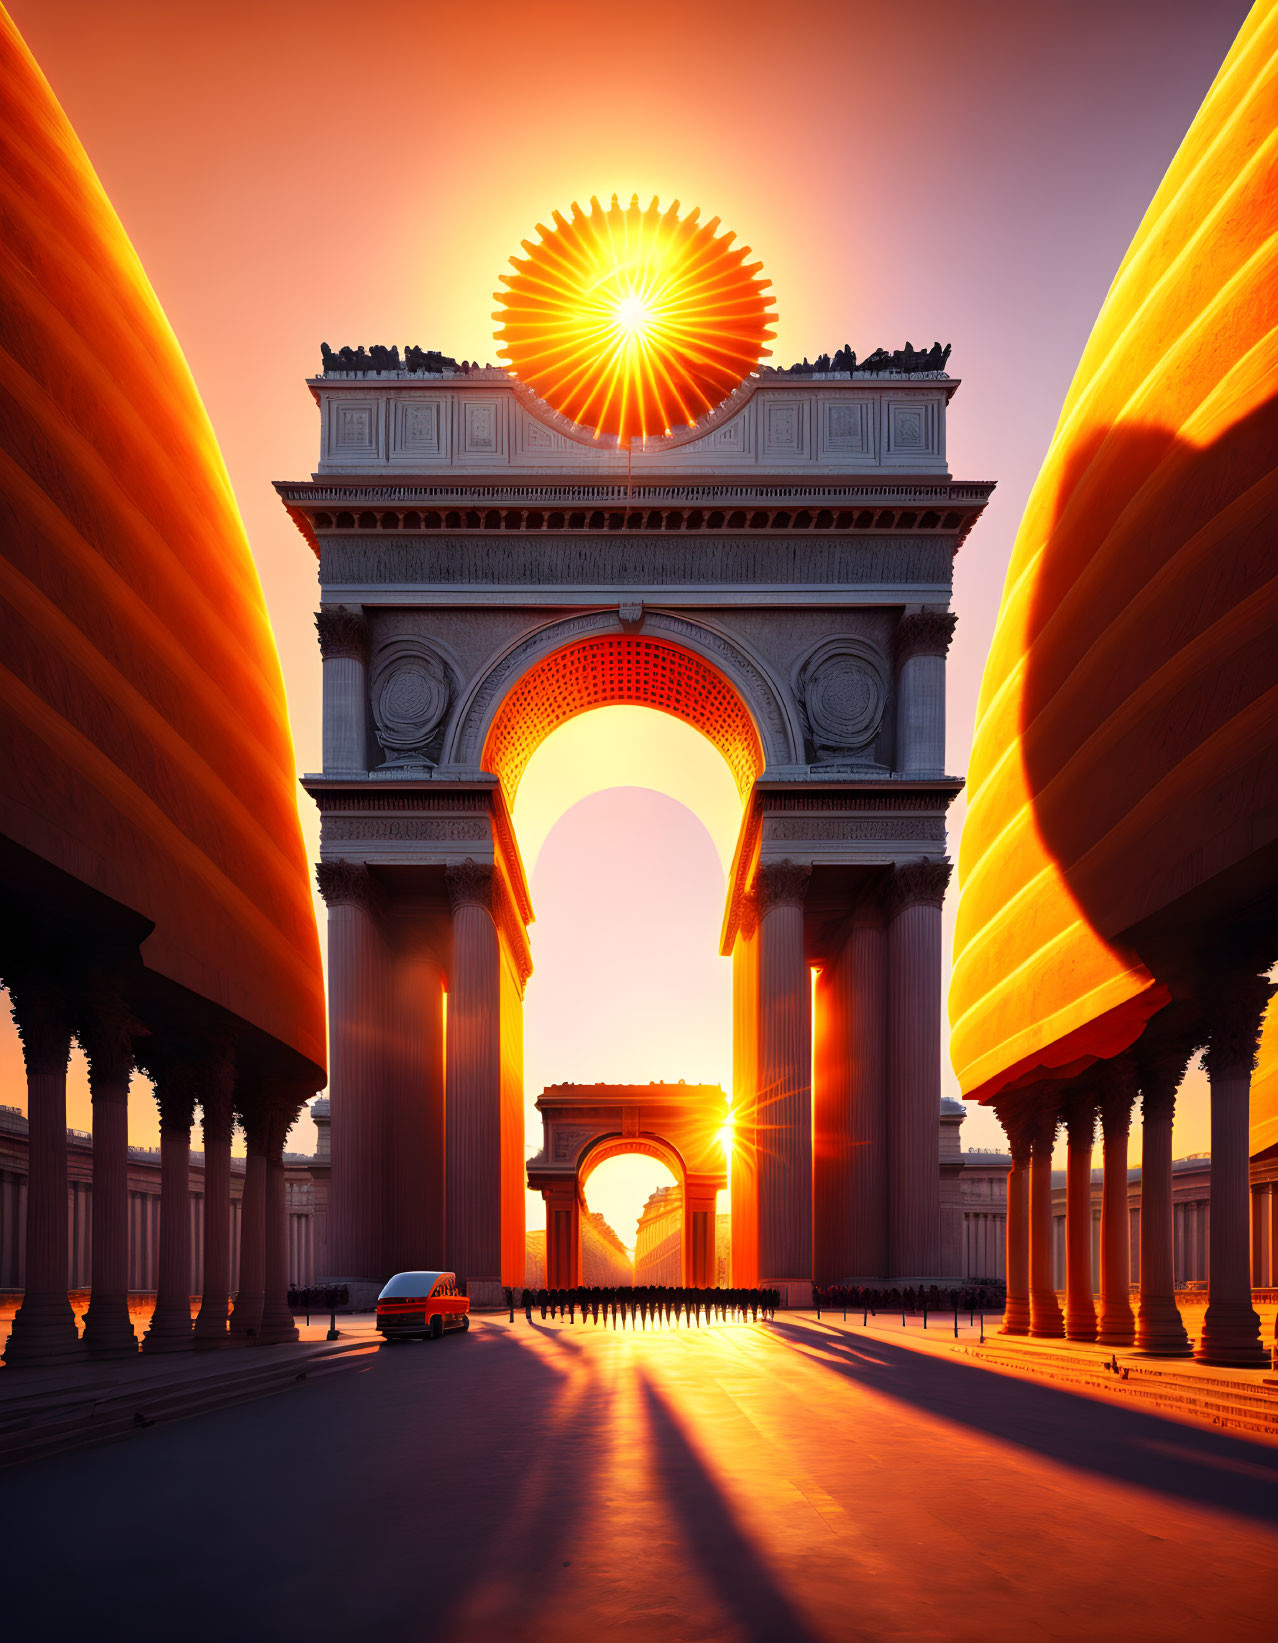 Iconic Arc de Triomphe with sunburst effect and long shadows on orange avenue